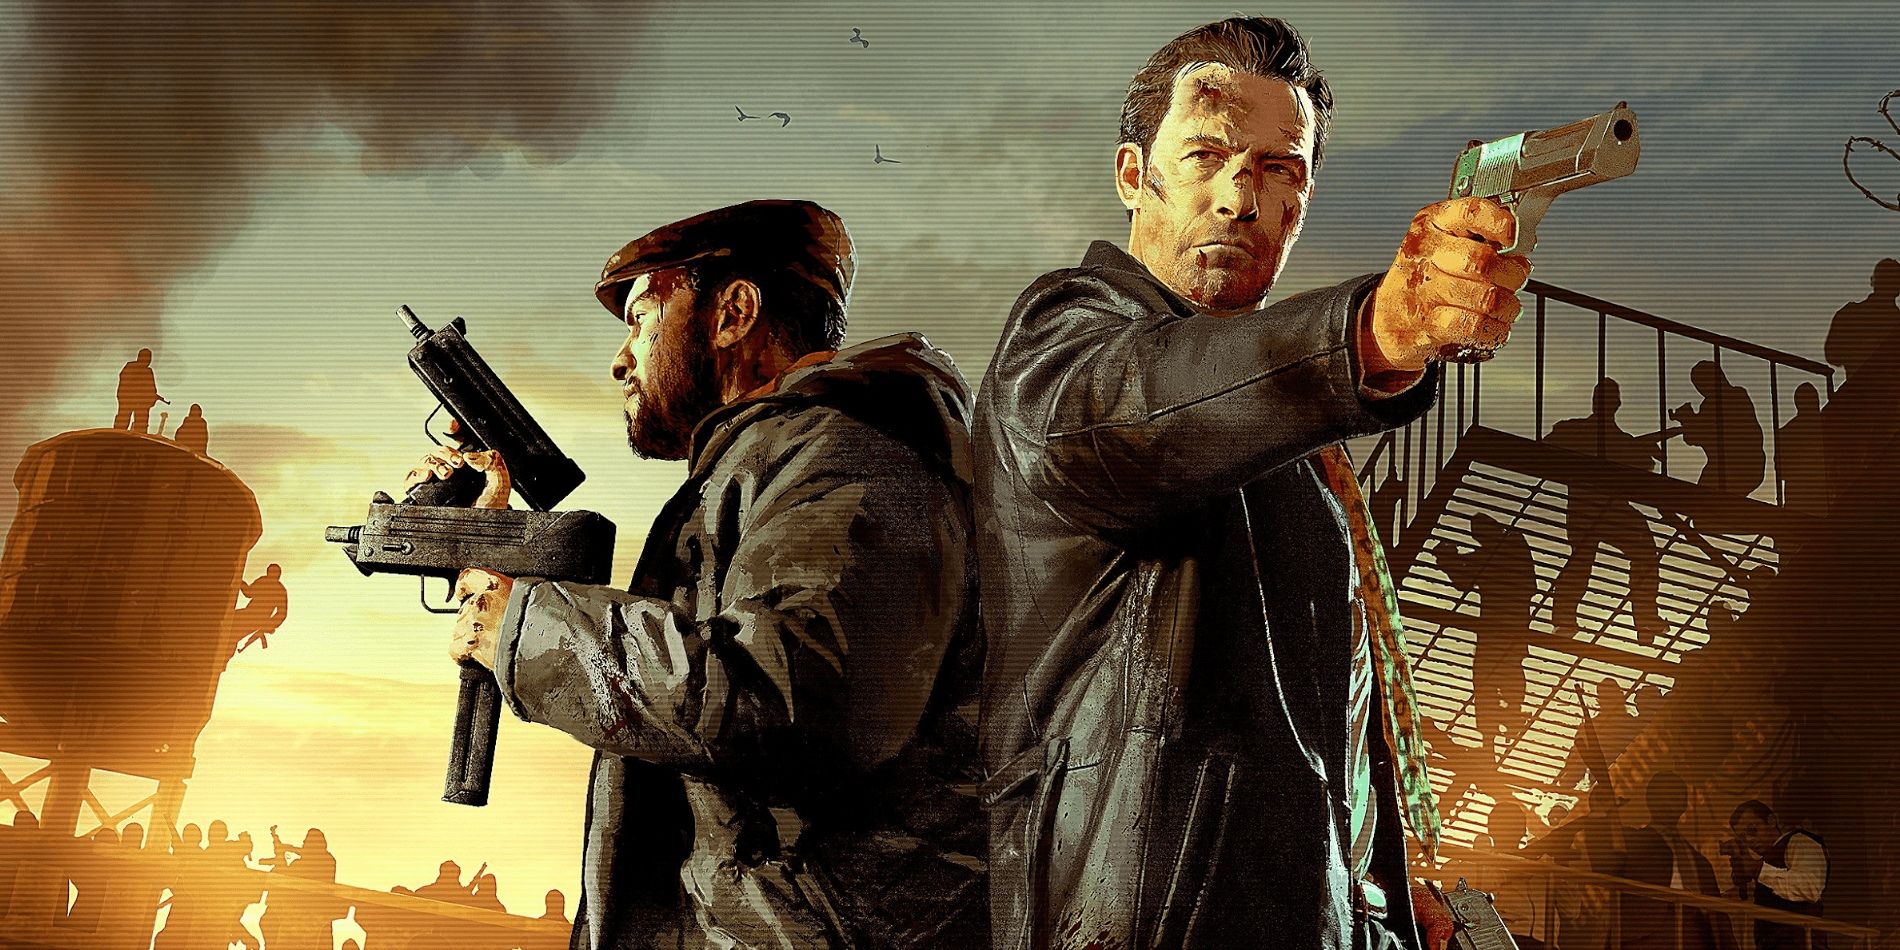 A Next Gen 'Max Payne' 1+2 Is Remake Is In Development